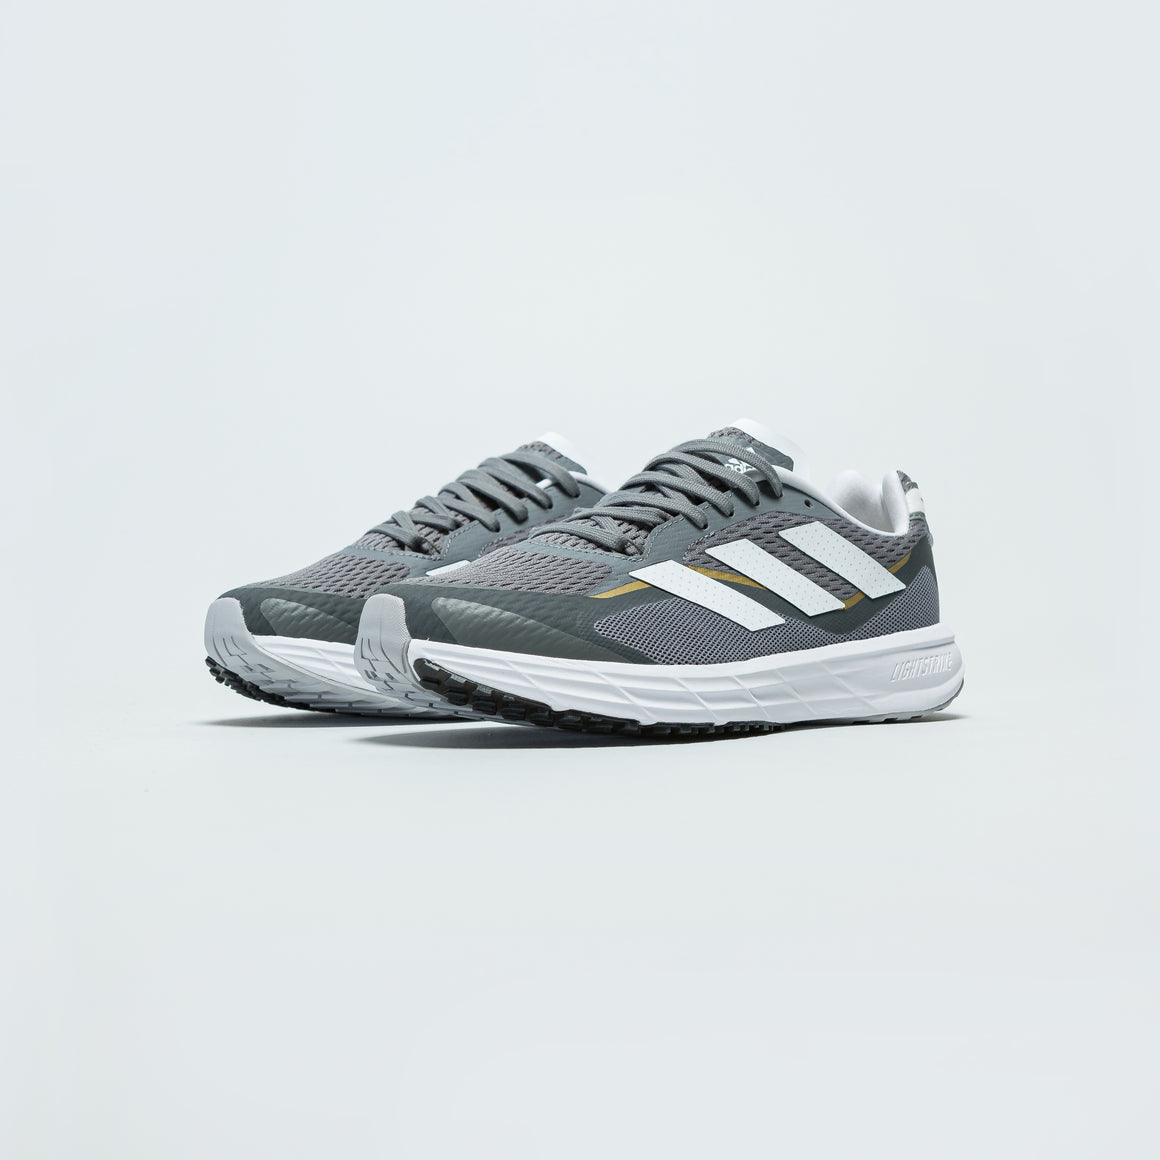 adidas - SL20.3 x TME - Grey Three/Footwear White - Up There Athletics